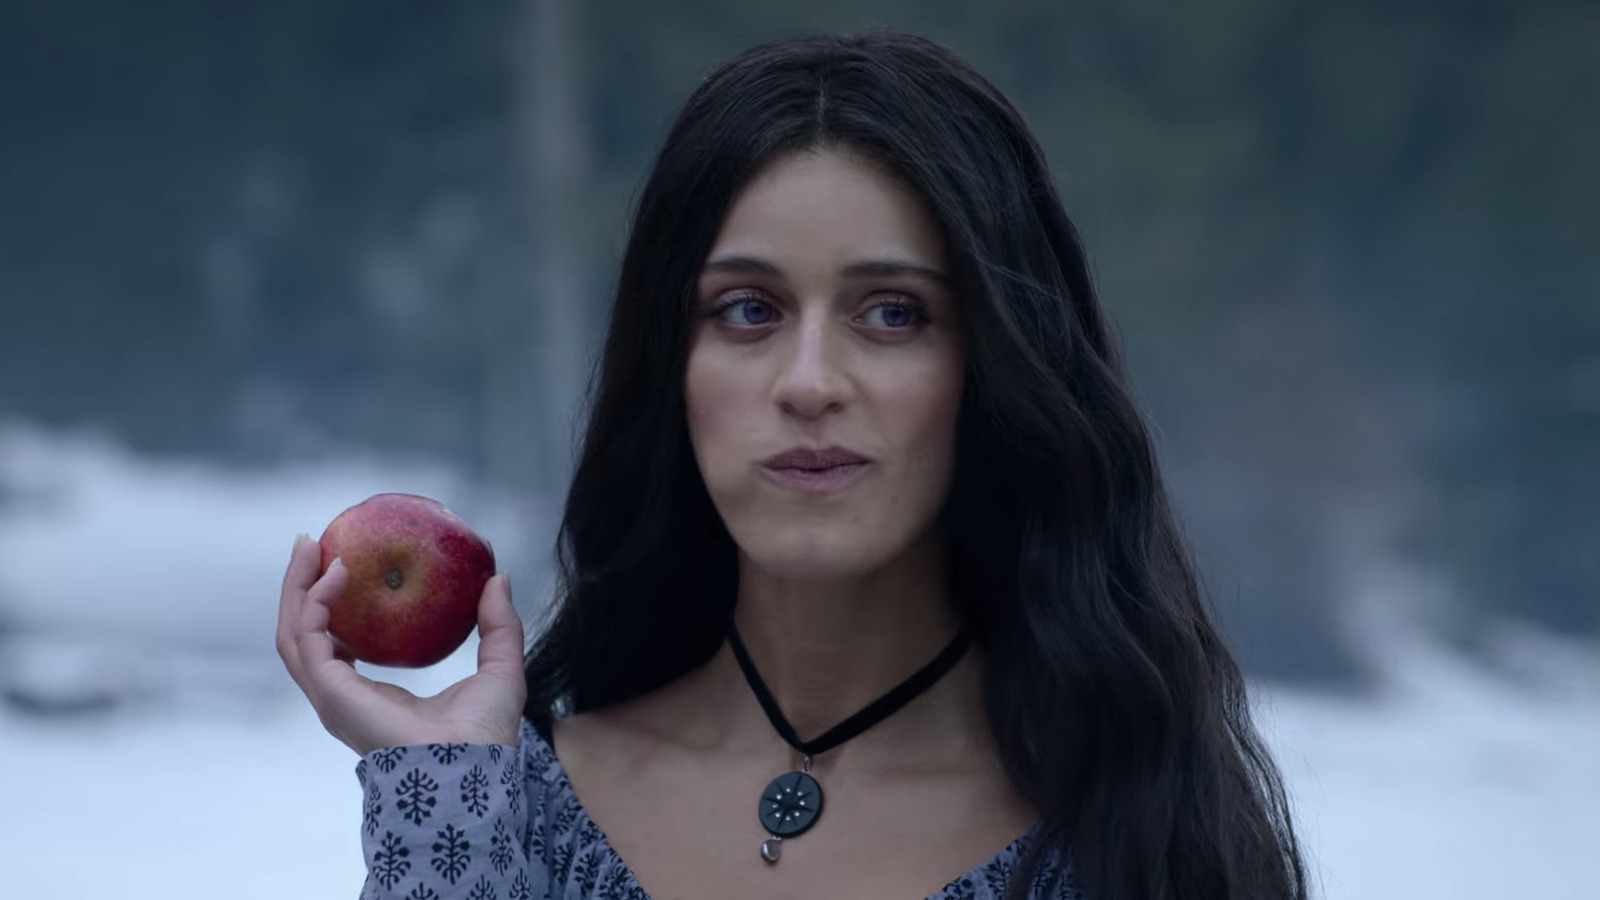 Witcher' Series on Netflix Casts Roles of Ciri, Yennefer – TVLine